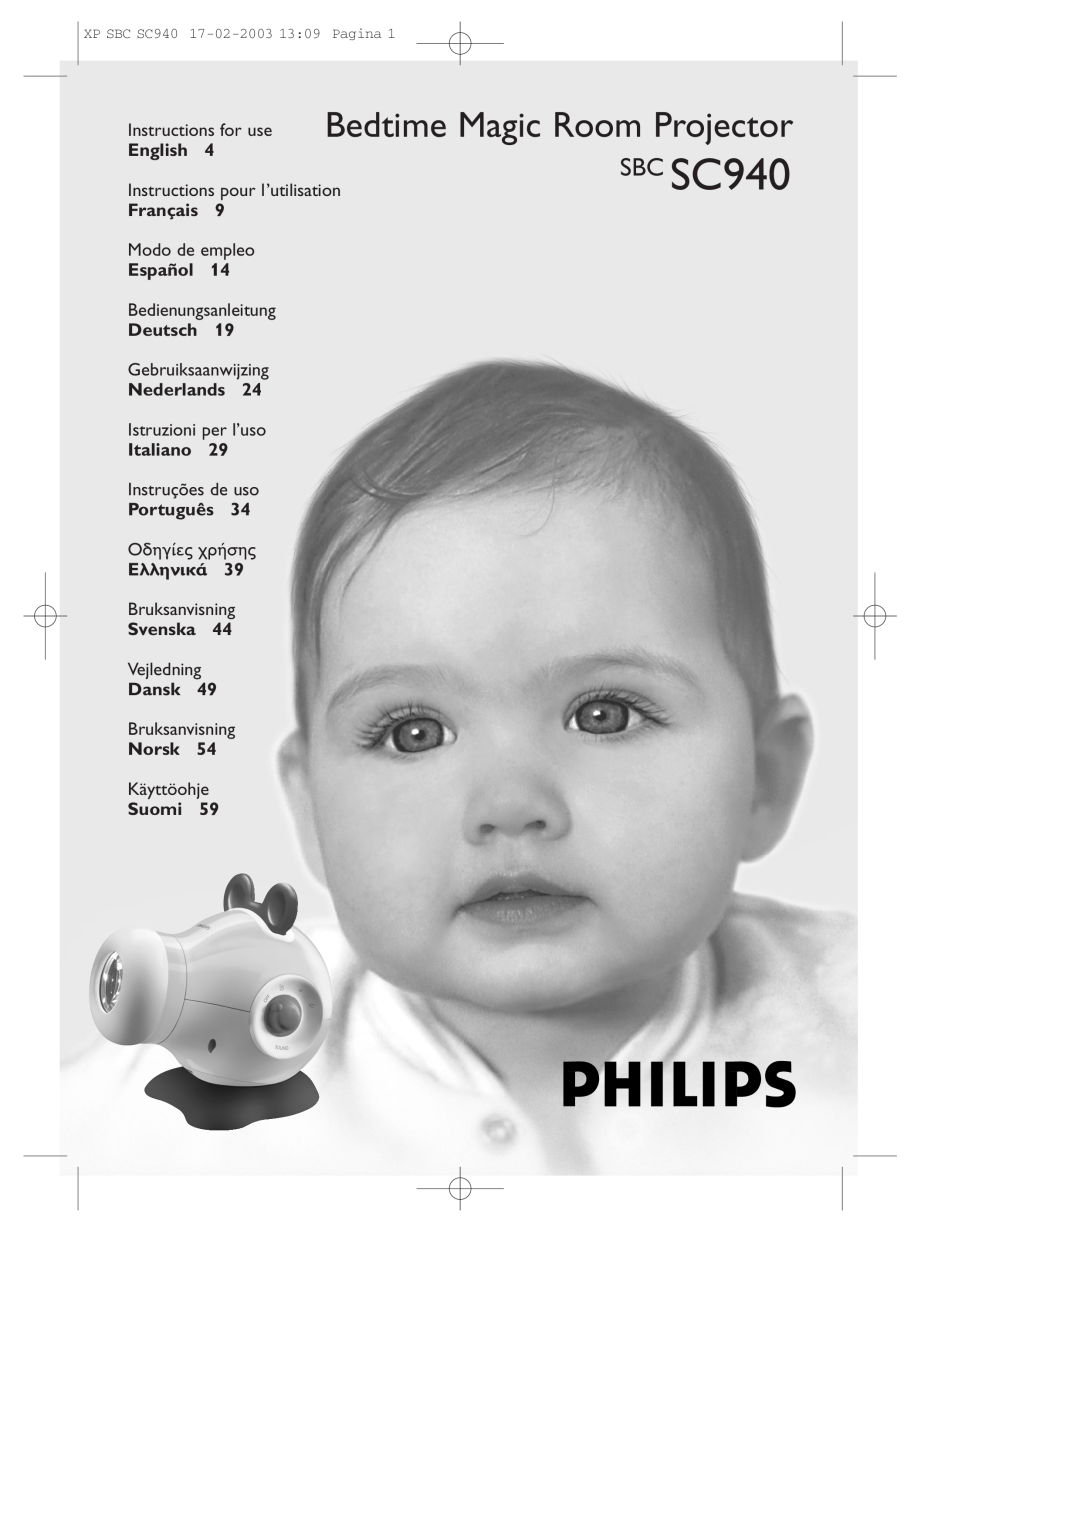 Philips SC940SBC manual SBC SC940, Instructions for use Bedtime Magic Room Projector, English, Français, Español, Deutsch 